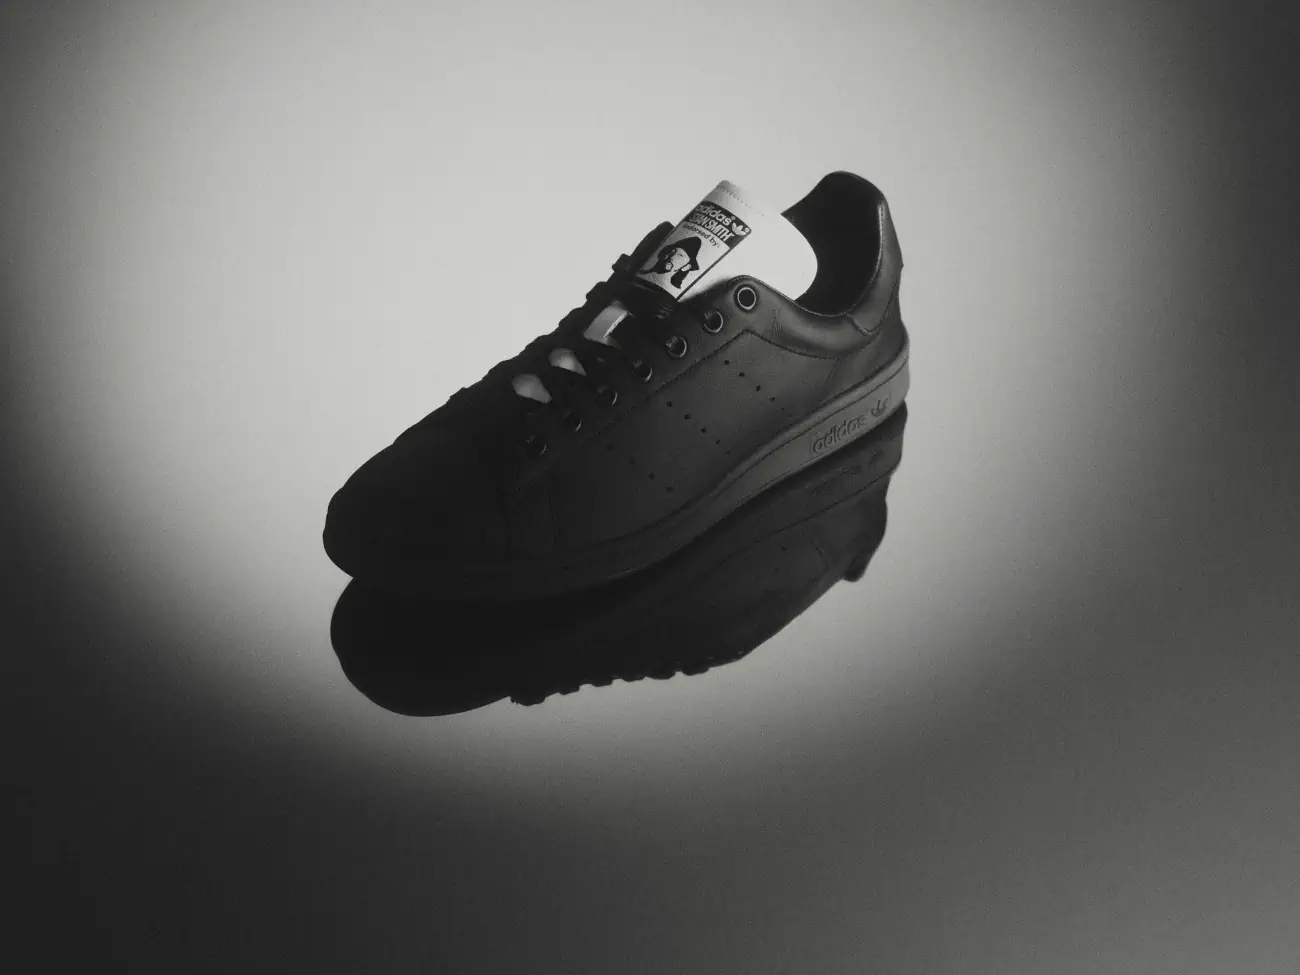 adidas and Yohji Yamamoto unveil the Yohji Yamamoto Stan Smith sneaker